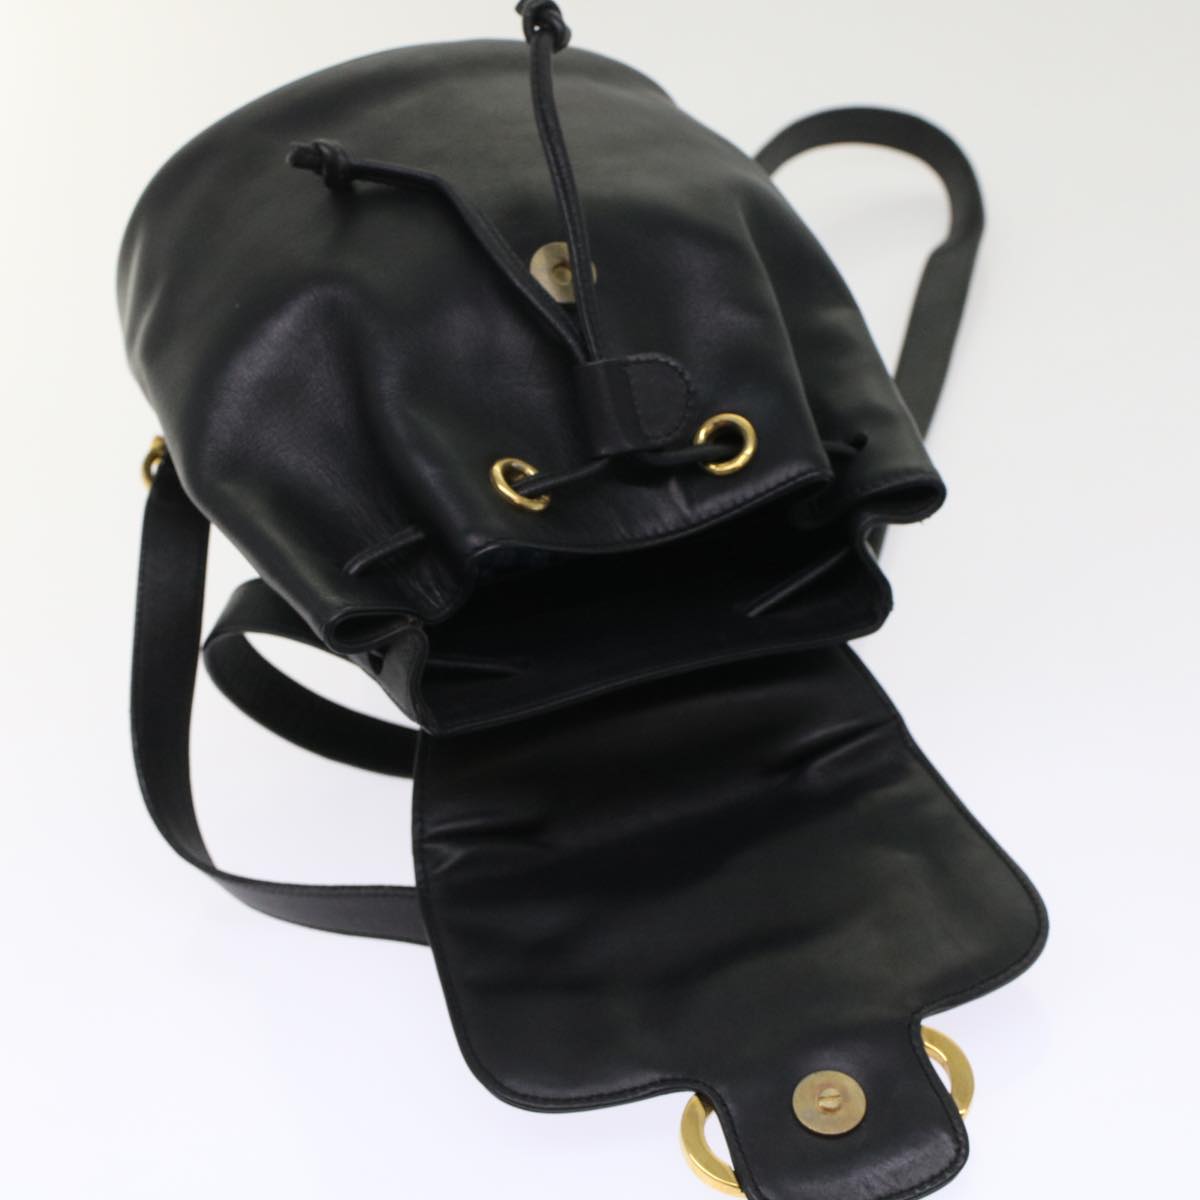 Salvatore Ferragamo Gancini Backpack Leather Black Auth hk771